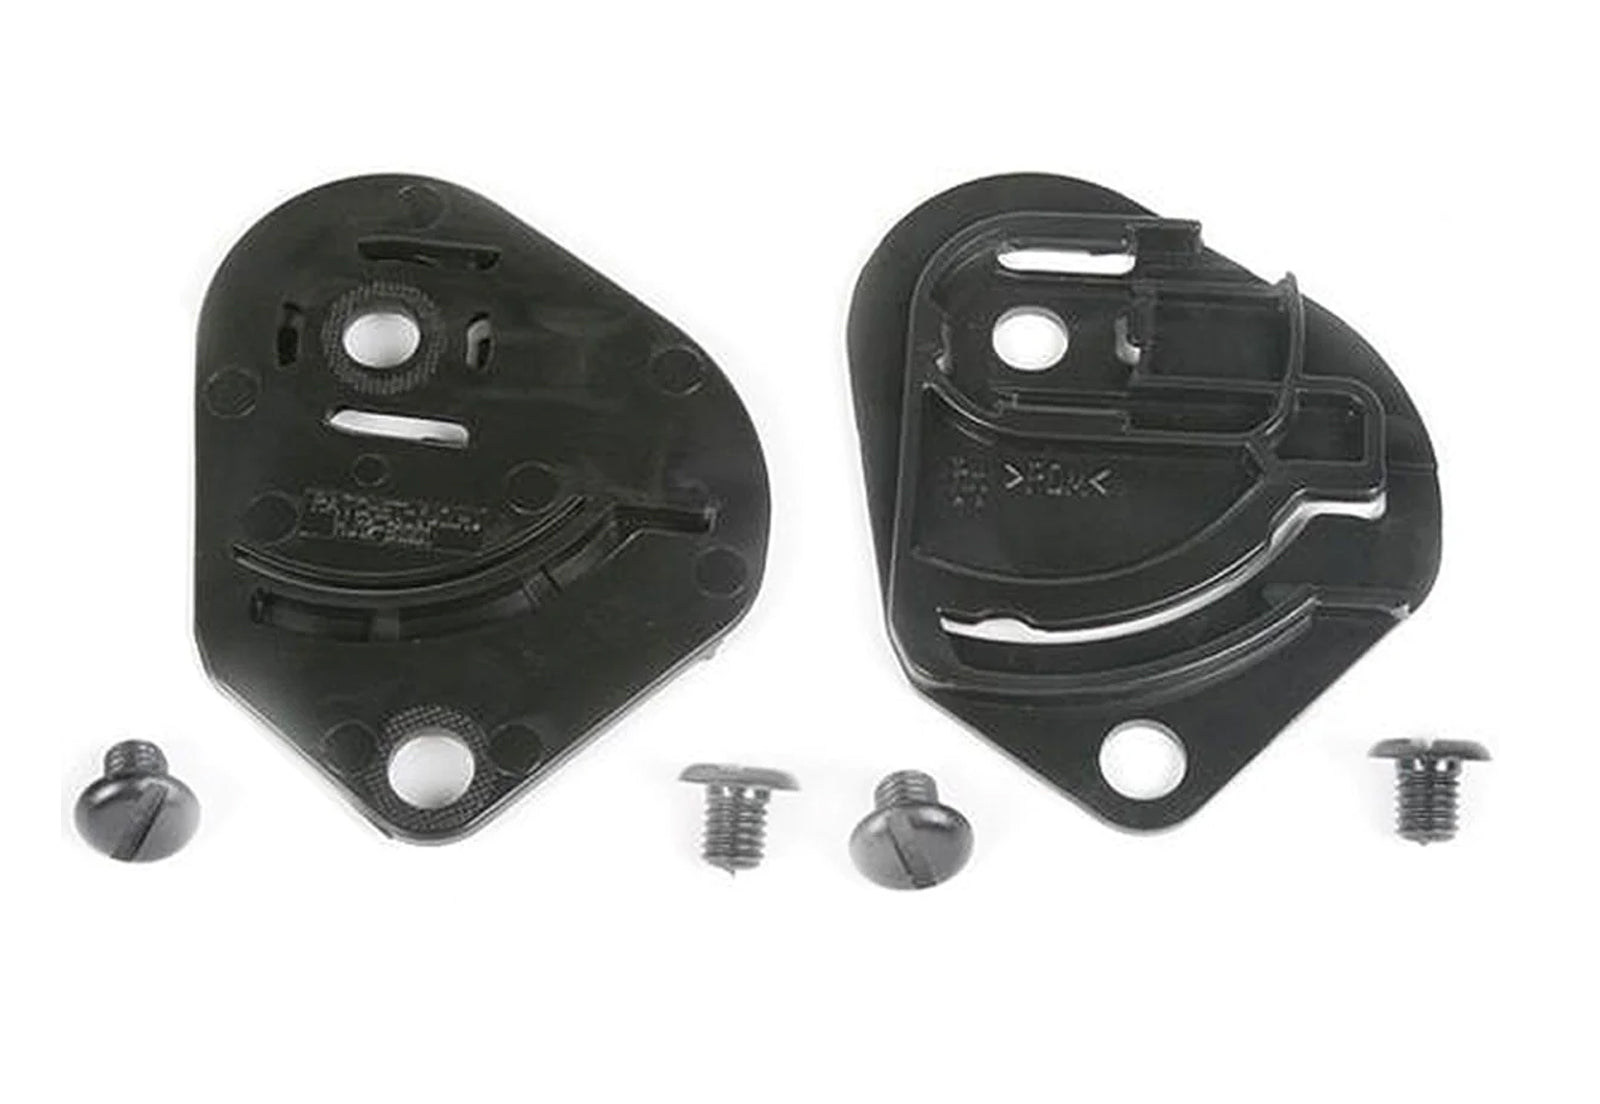 
Z1R Ace Harley Cruiser Shield Pivot Kit Adult Helmet Accessories 